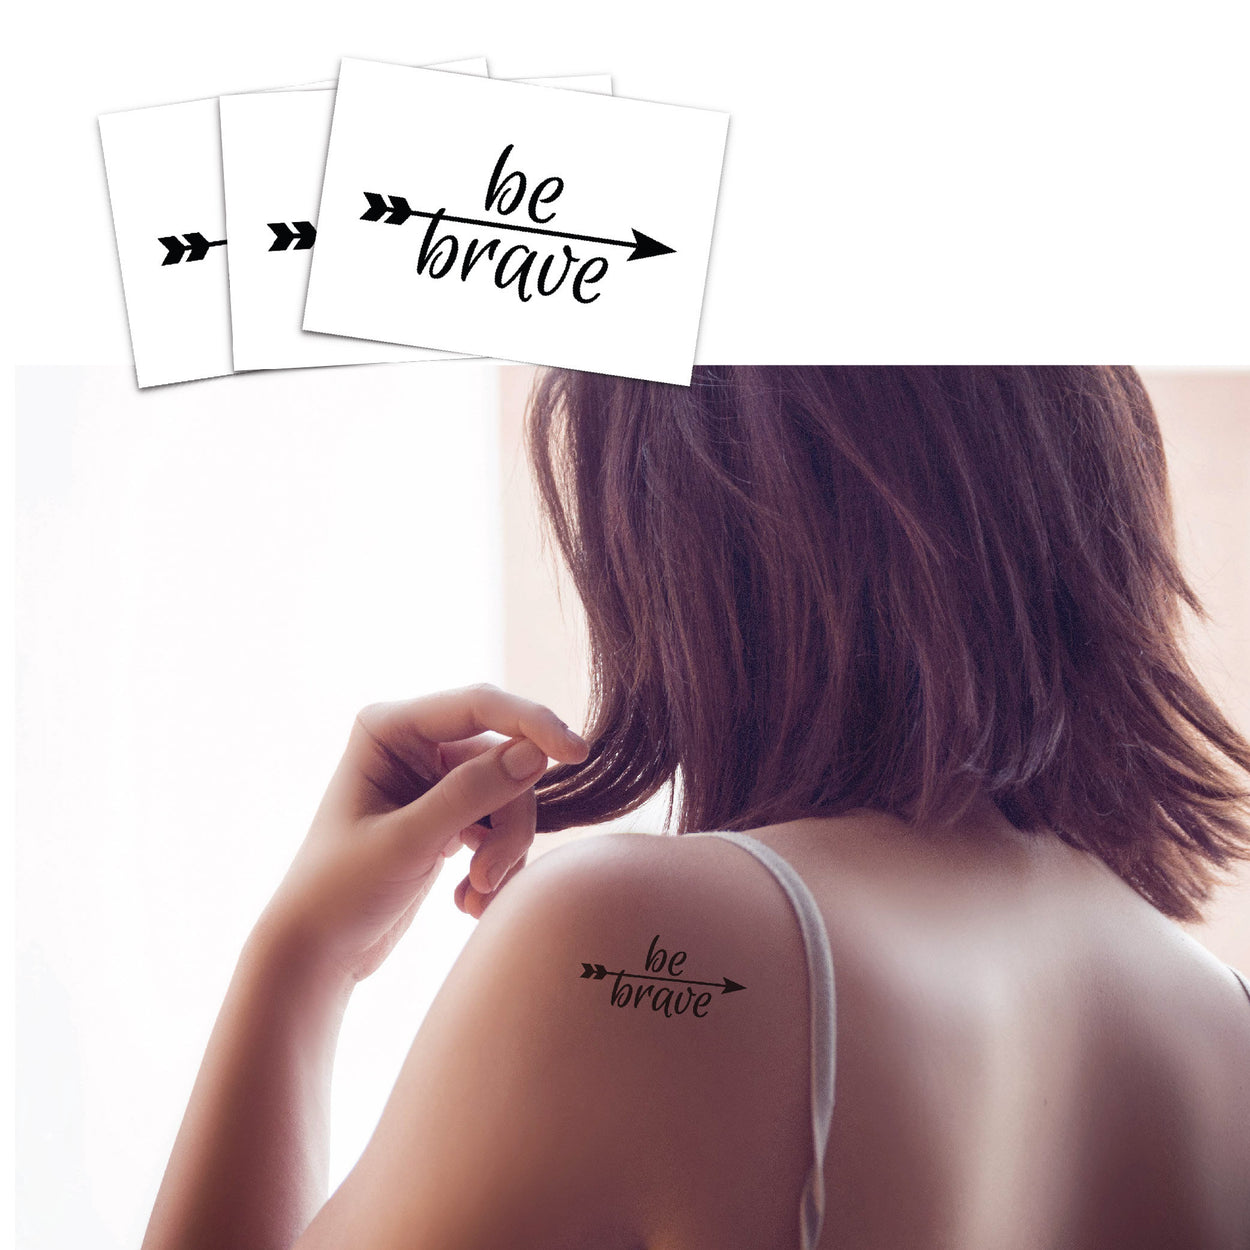 Be brave @ Tattstore